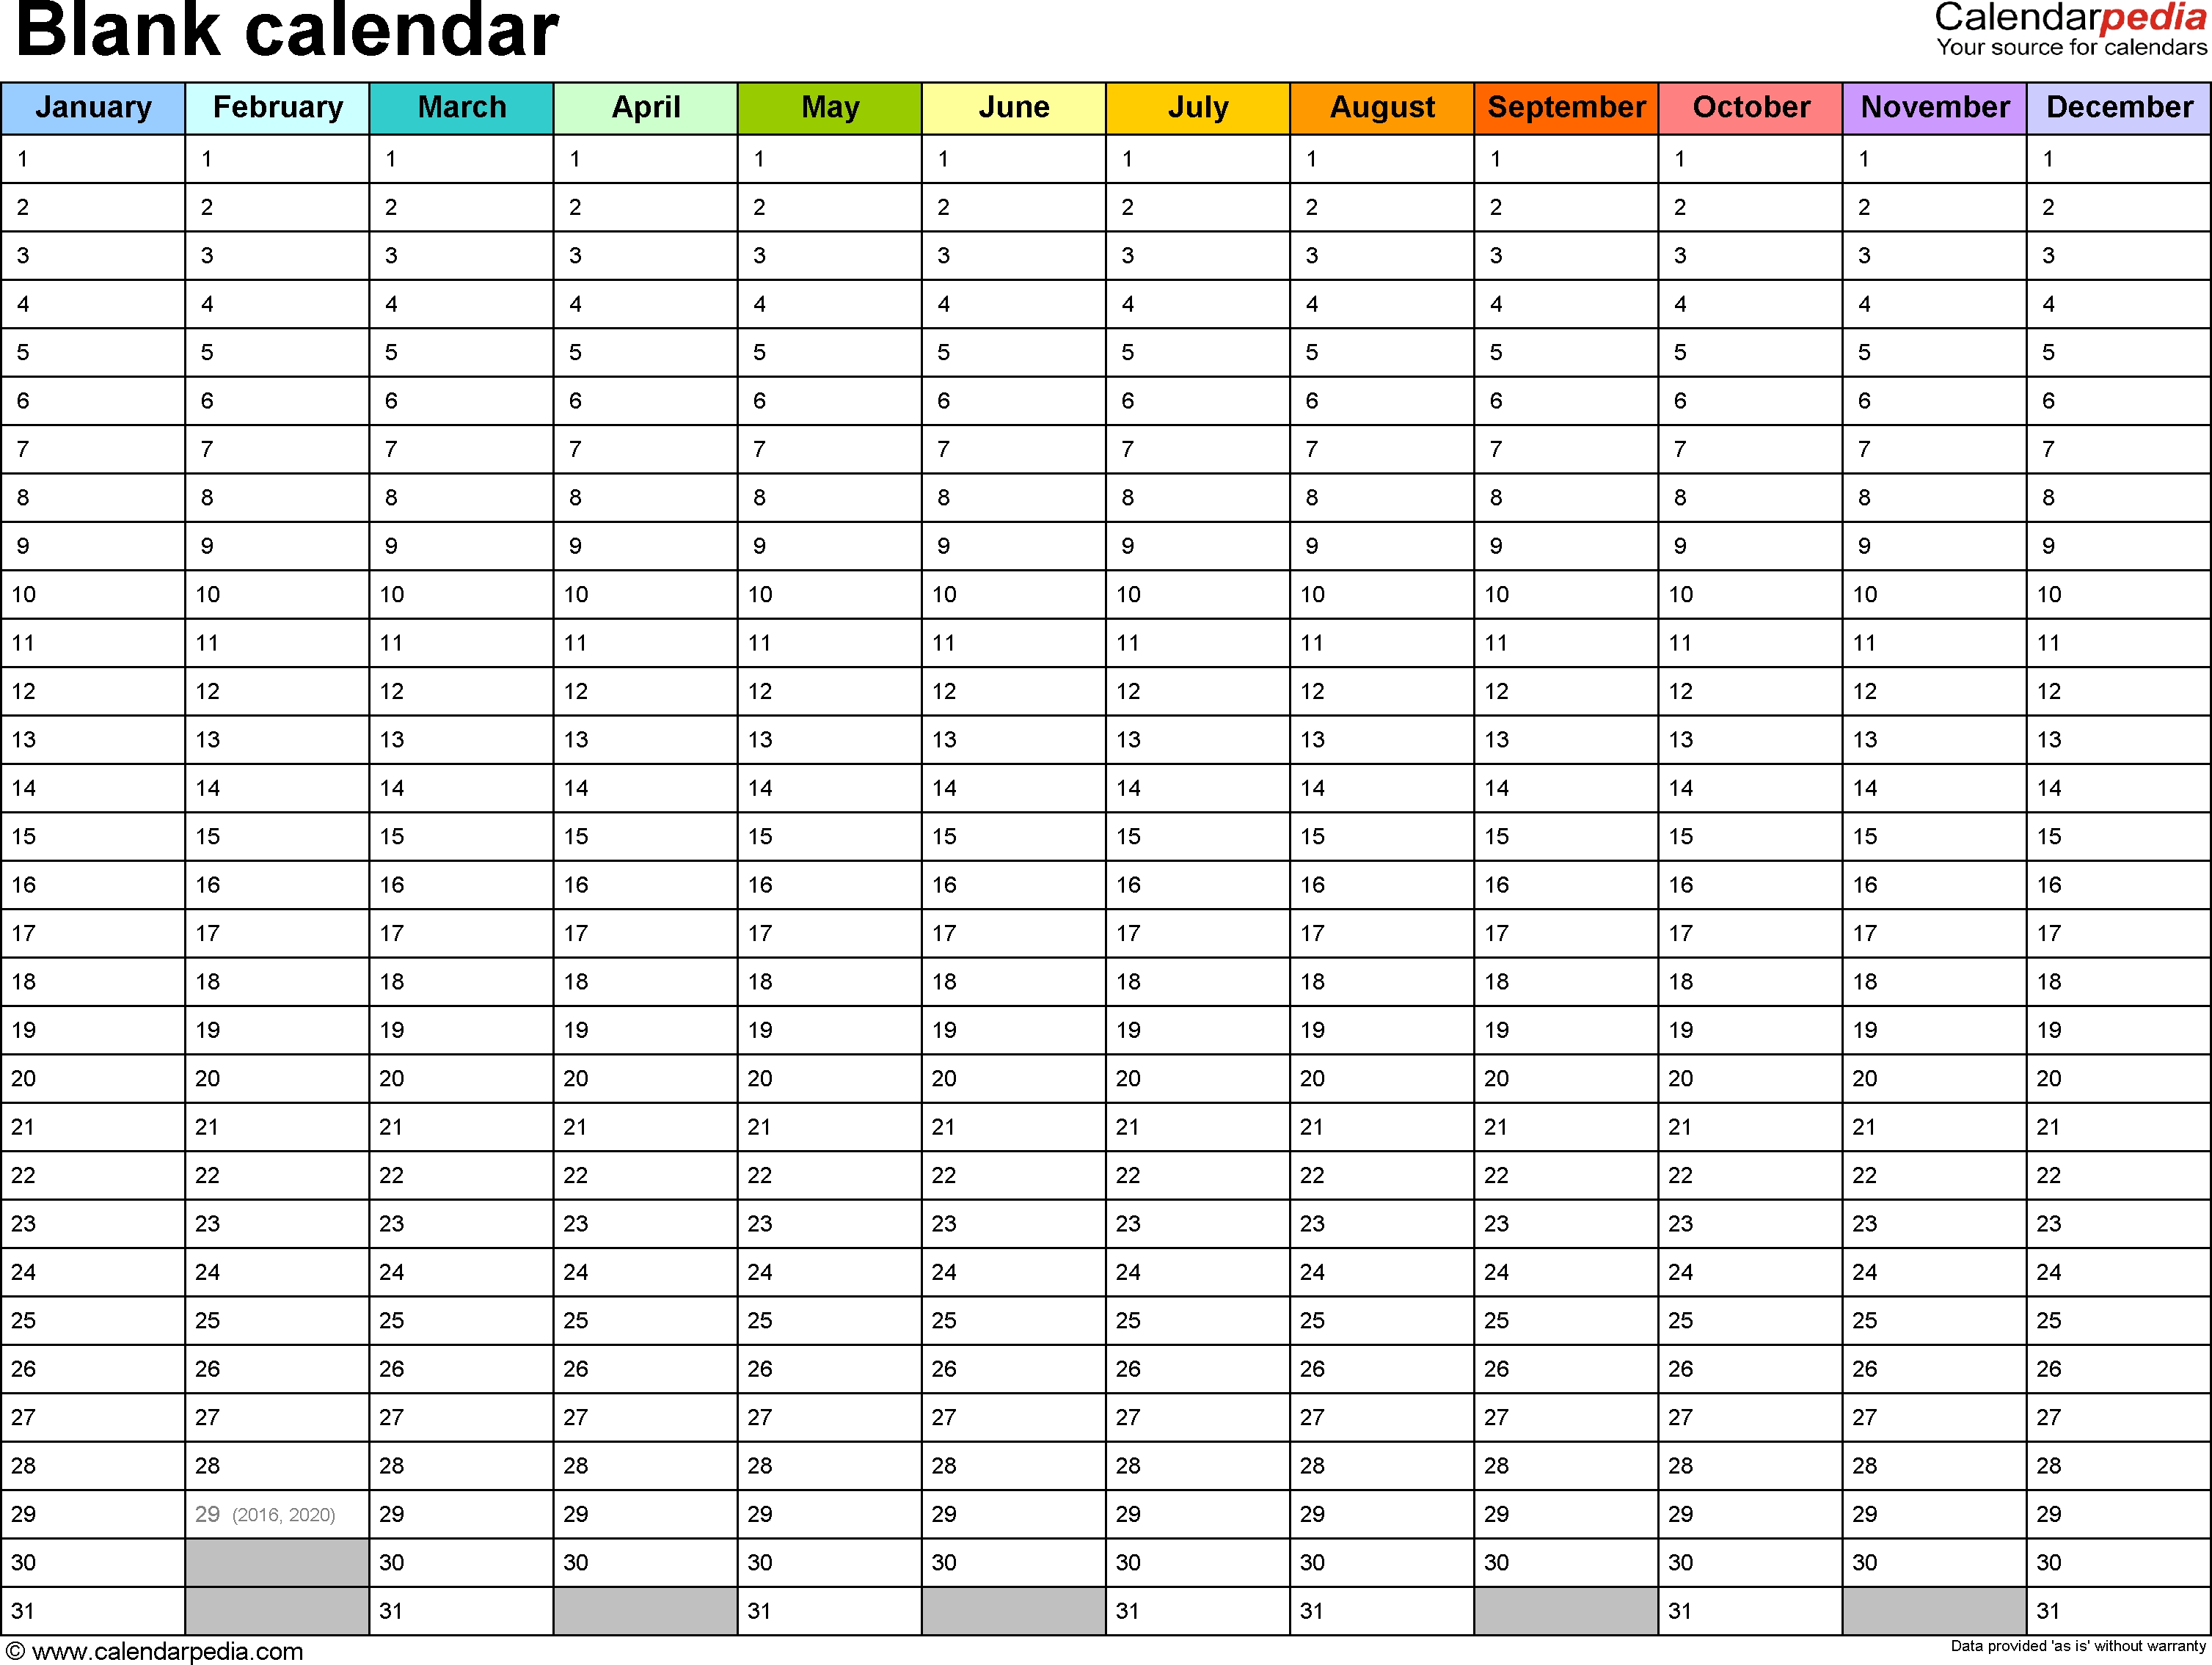 Blank Calendar - 9 Free Printable Microsoft Word Templates Blank Calendar Month View